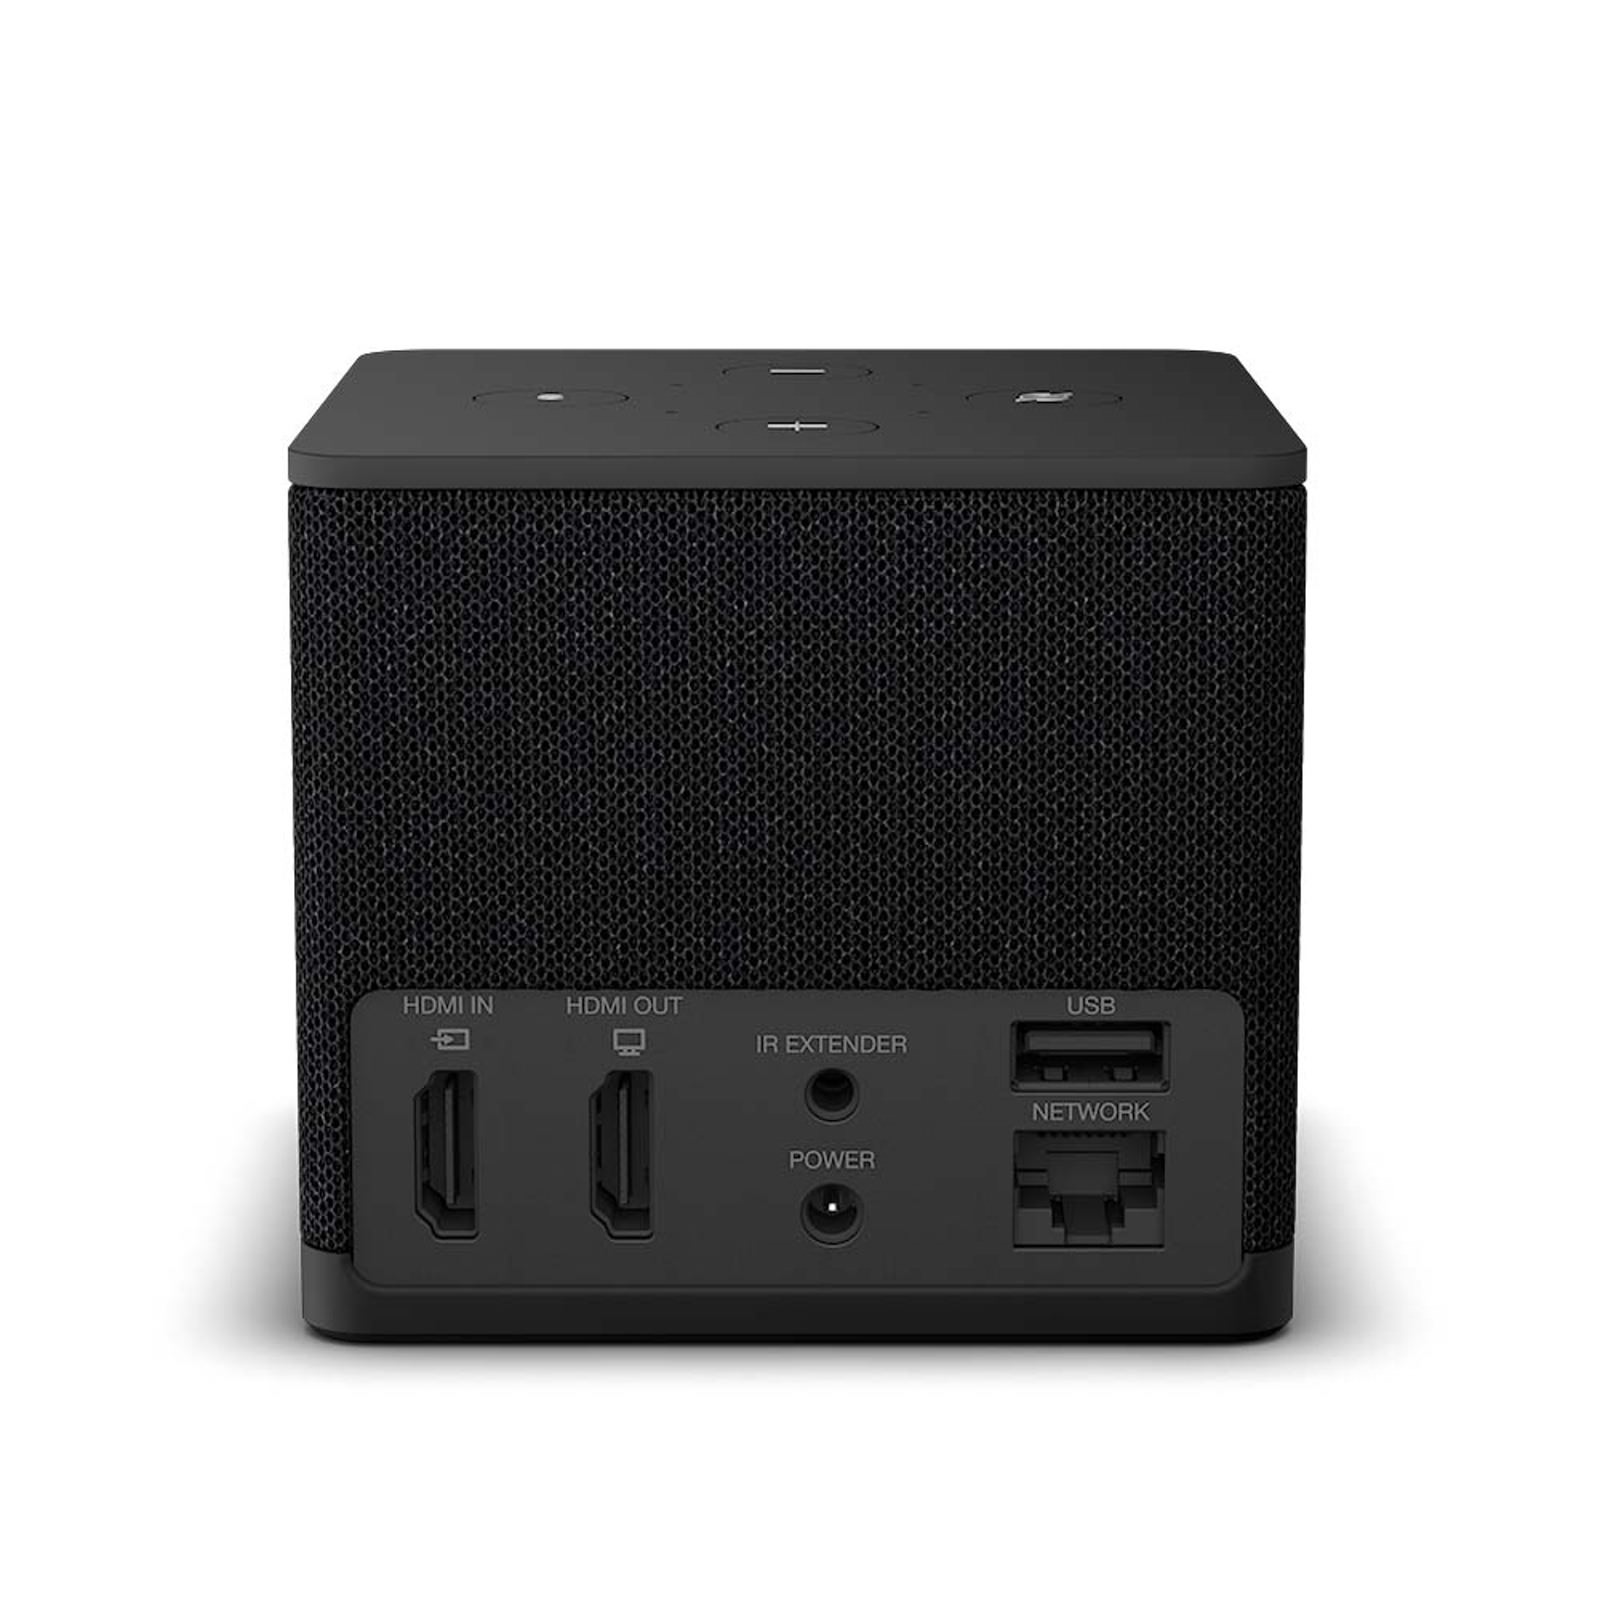 Amazon、新型Fire TV Cubeを発表。シリーズ史上最速の操作感を実現 | ゴリミー